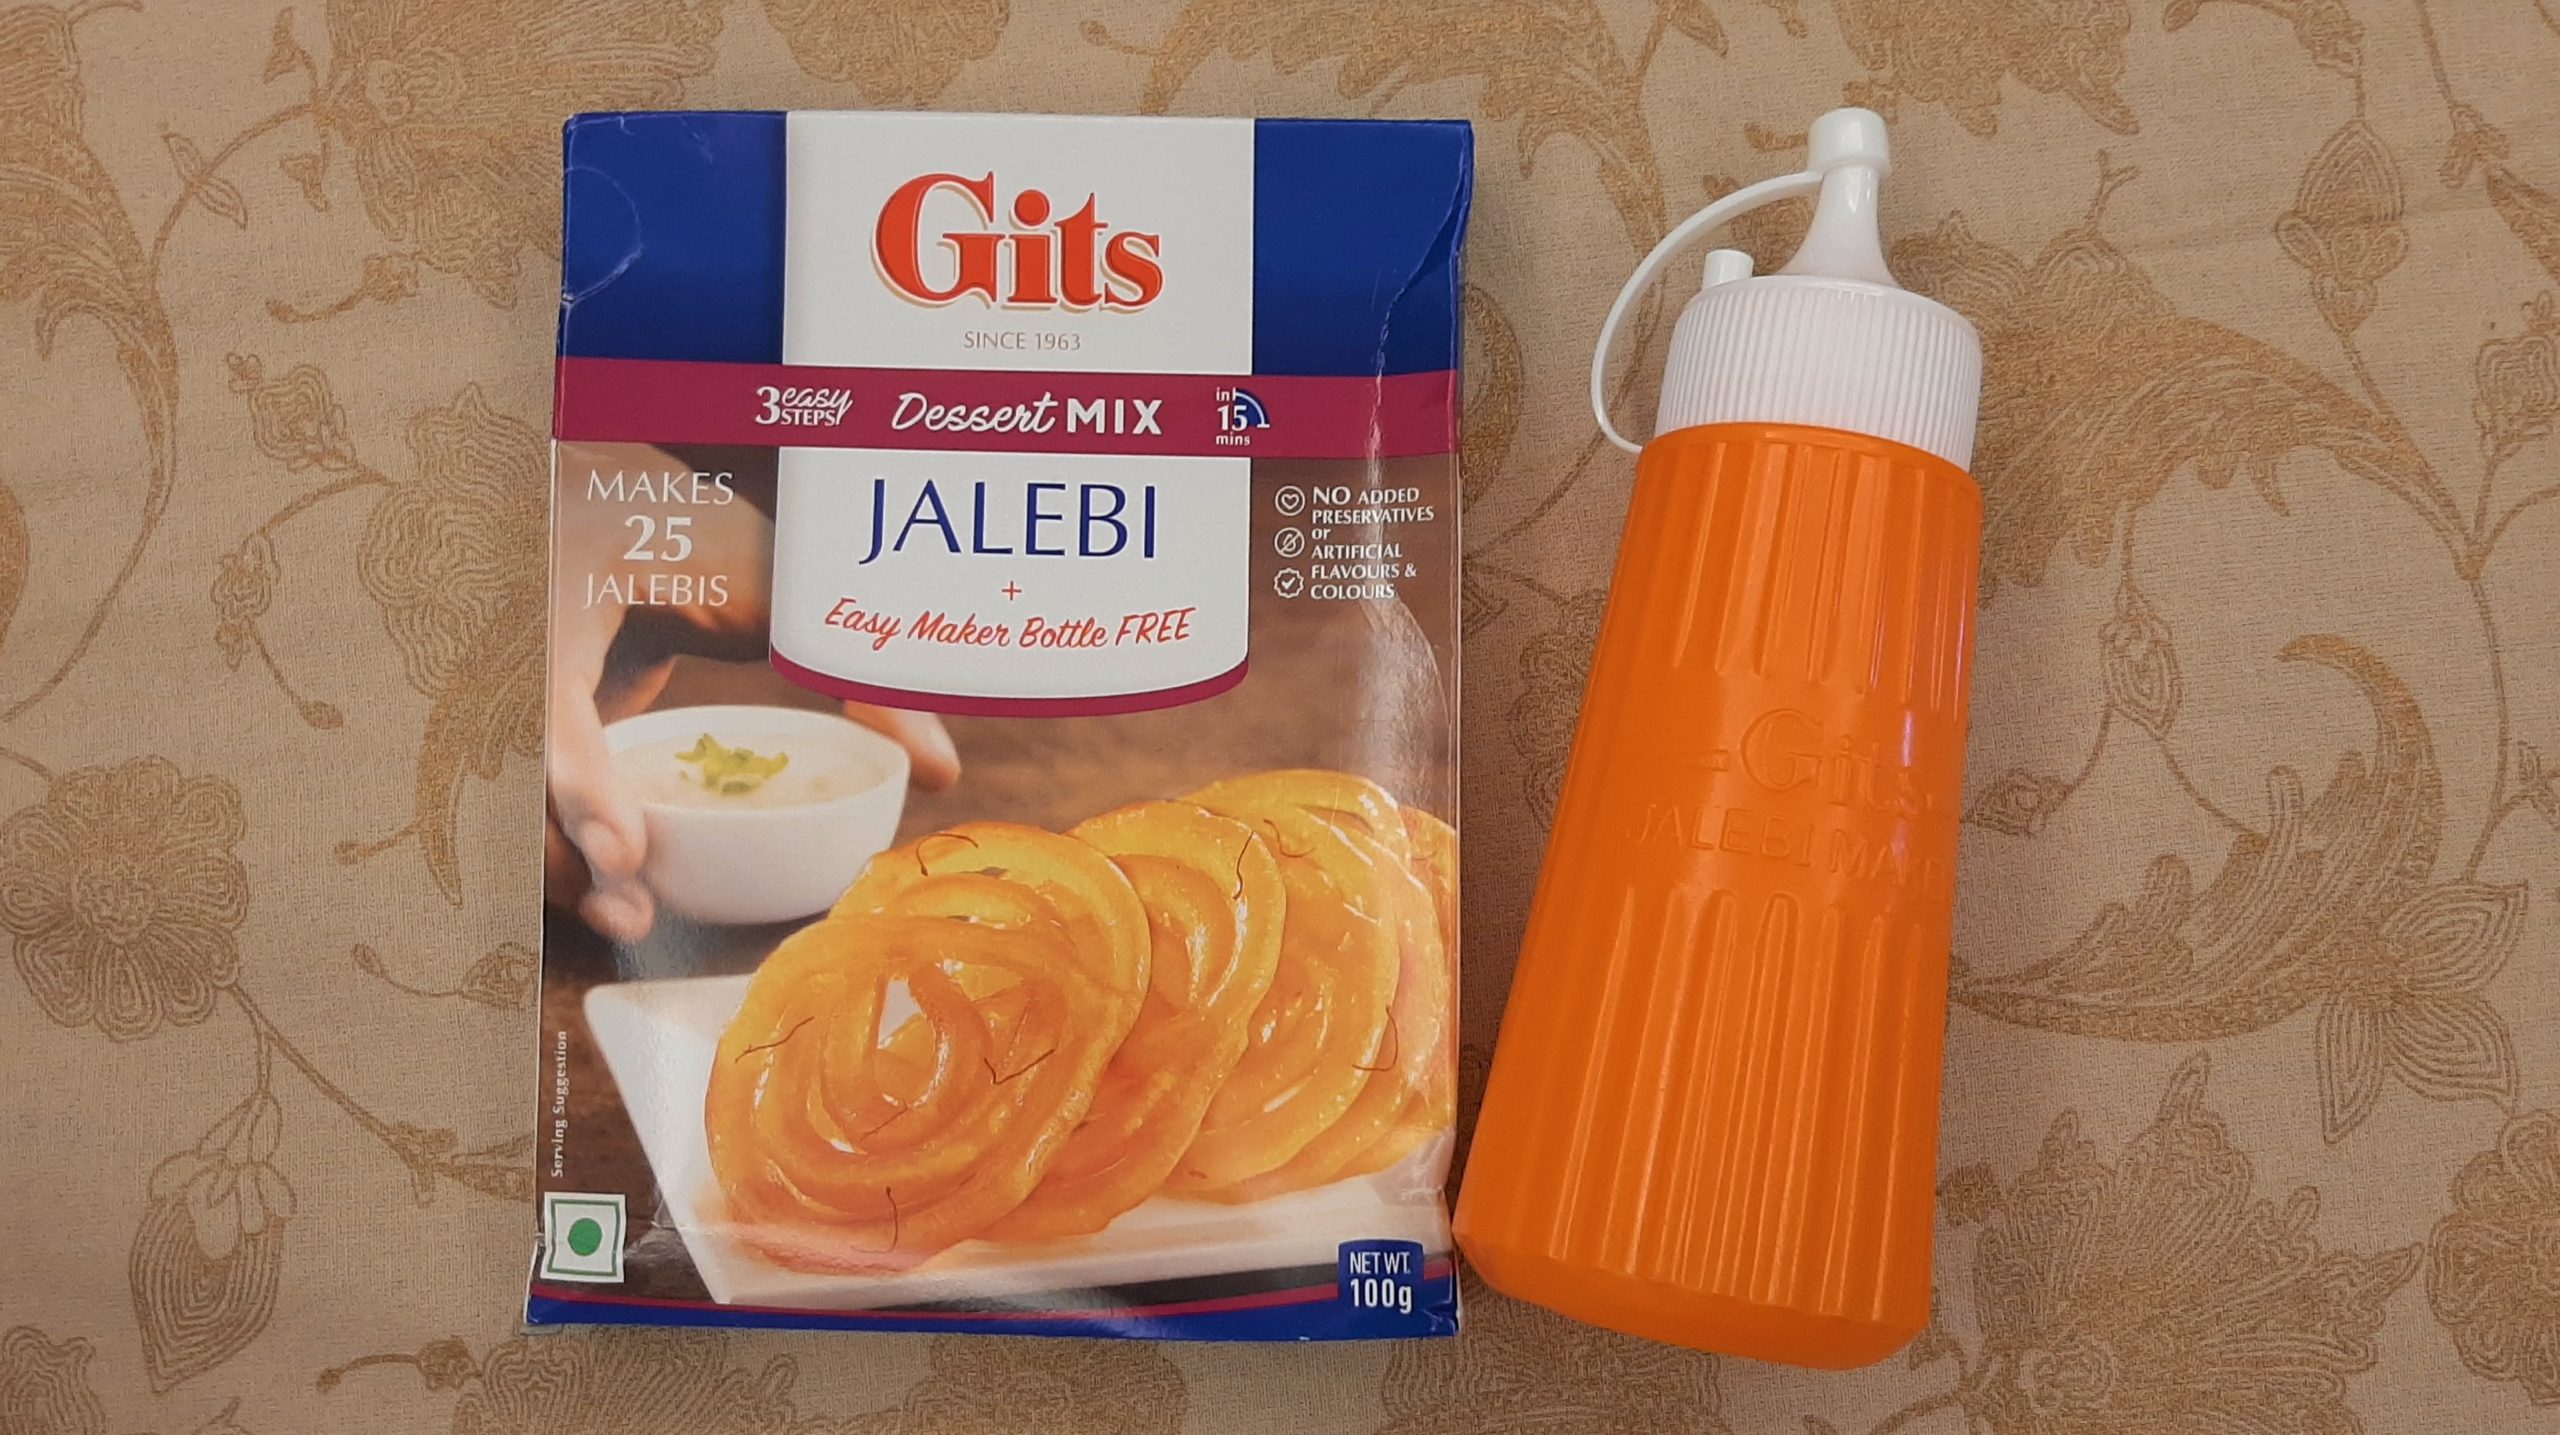 Gits Jalebi Dessert Mix: #FirstImpressions